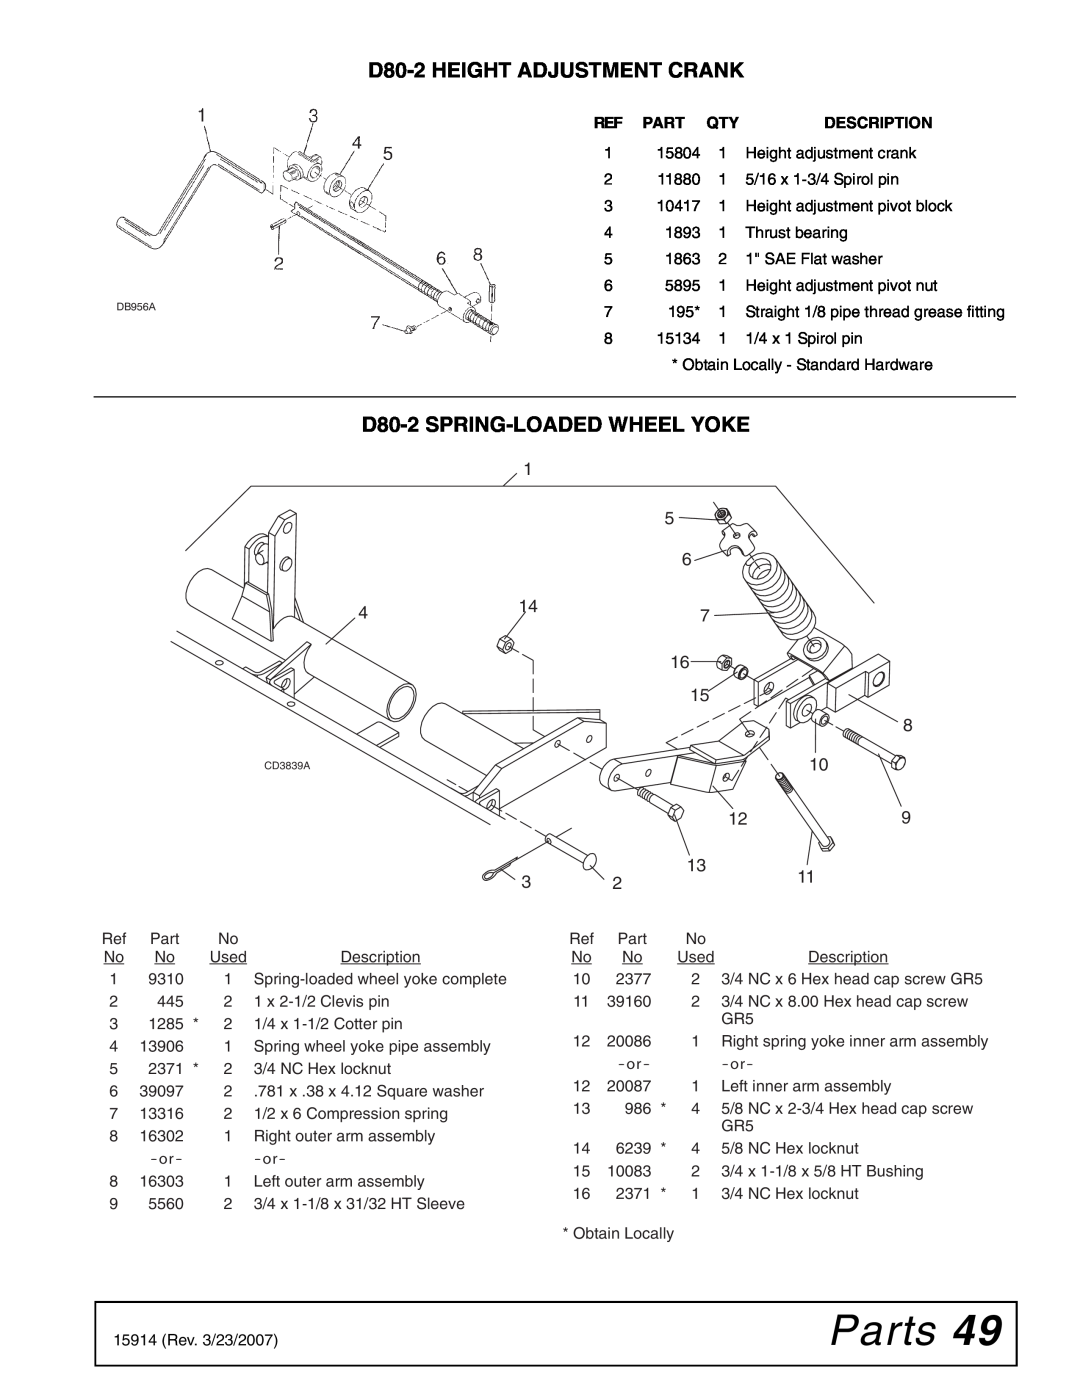 Woods Equipment MD80-2 manual Parts, D80-2HEIGHT ADJUSTMENT CRANK, D80-2 SPRING-LOADEDWHEEL YOKE, or - - or 